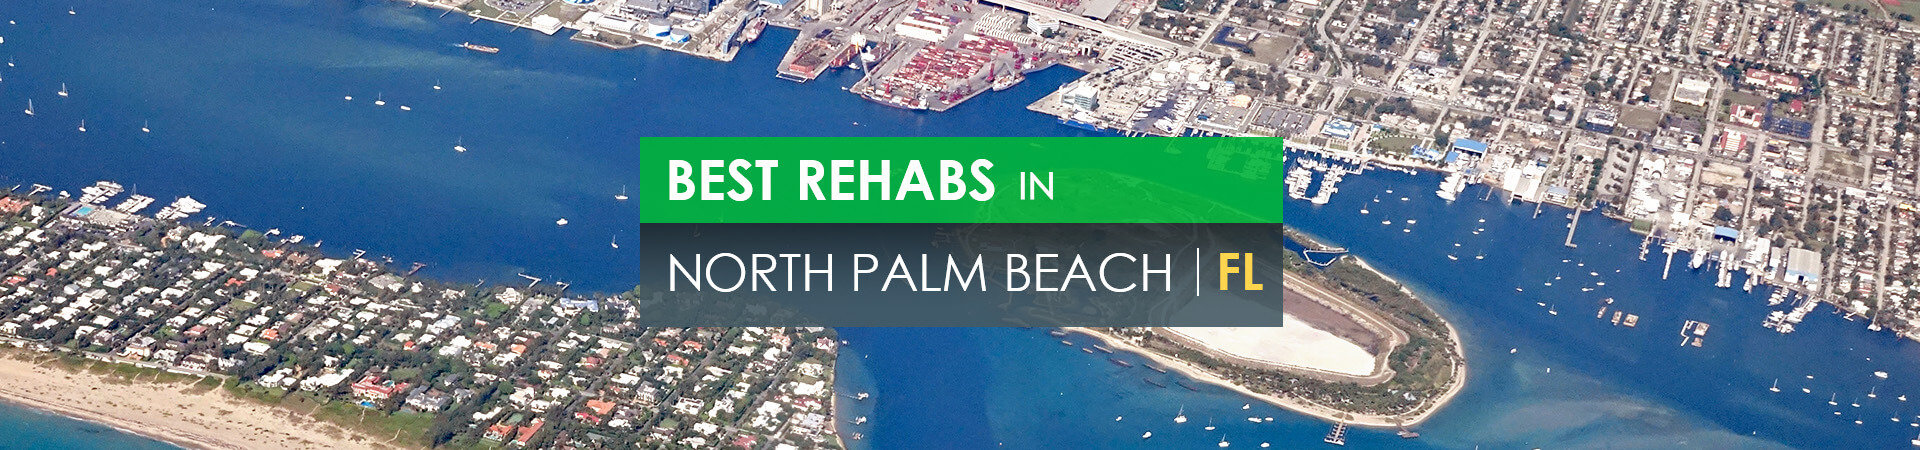 Best rehabs in North Palm Beach, FL